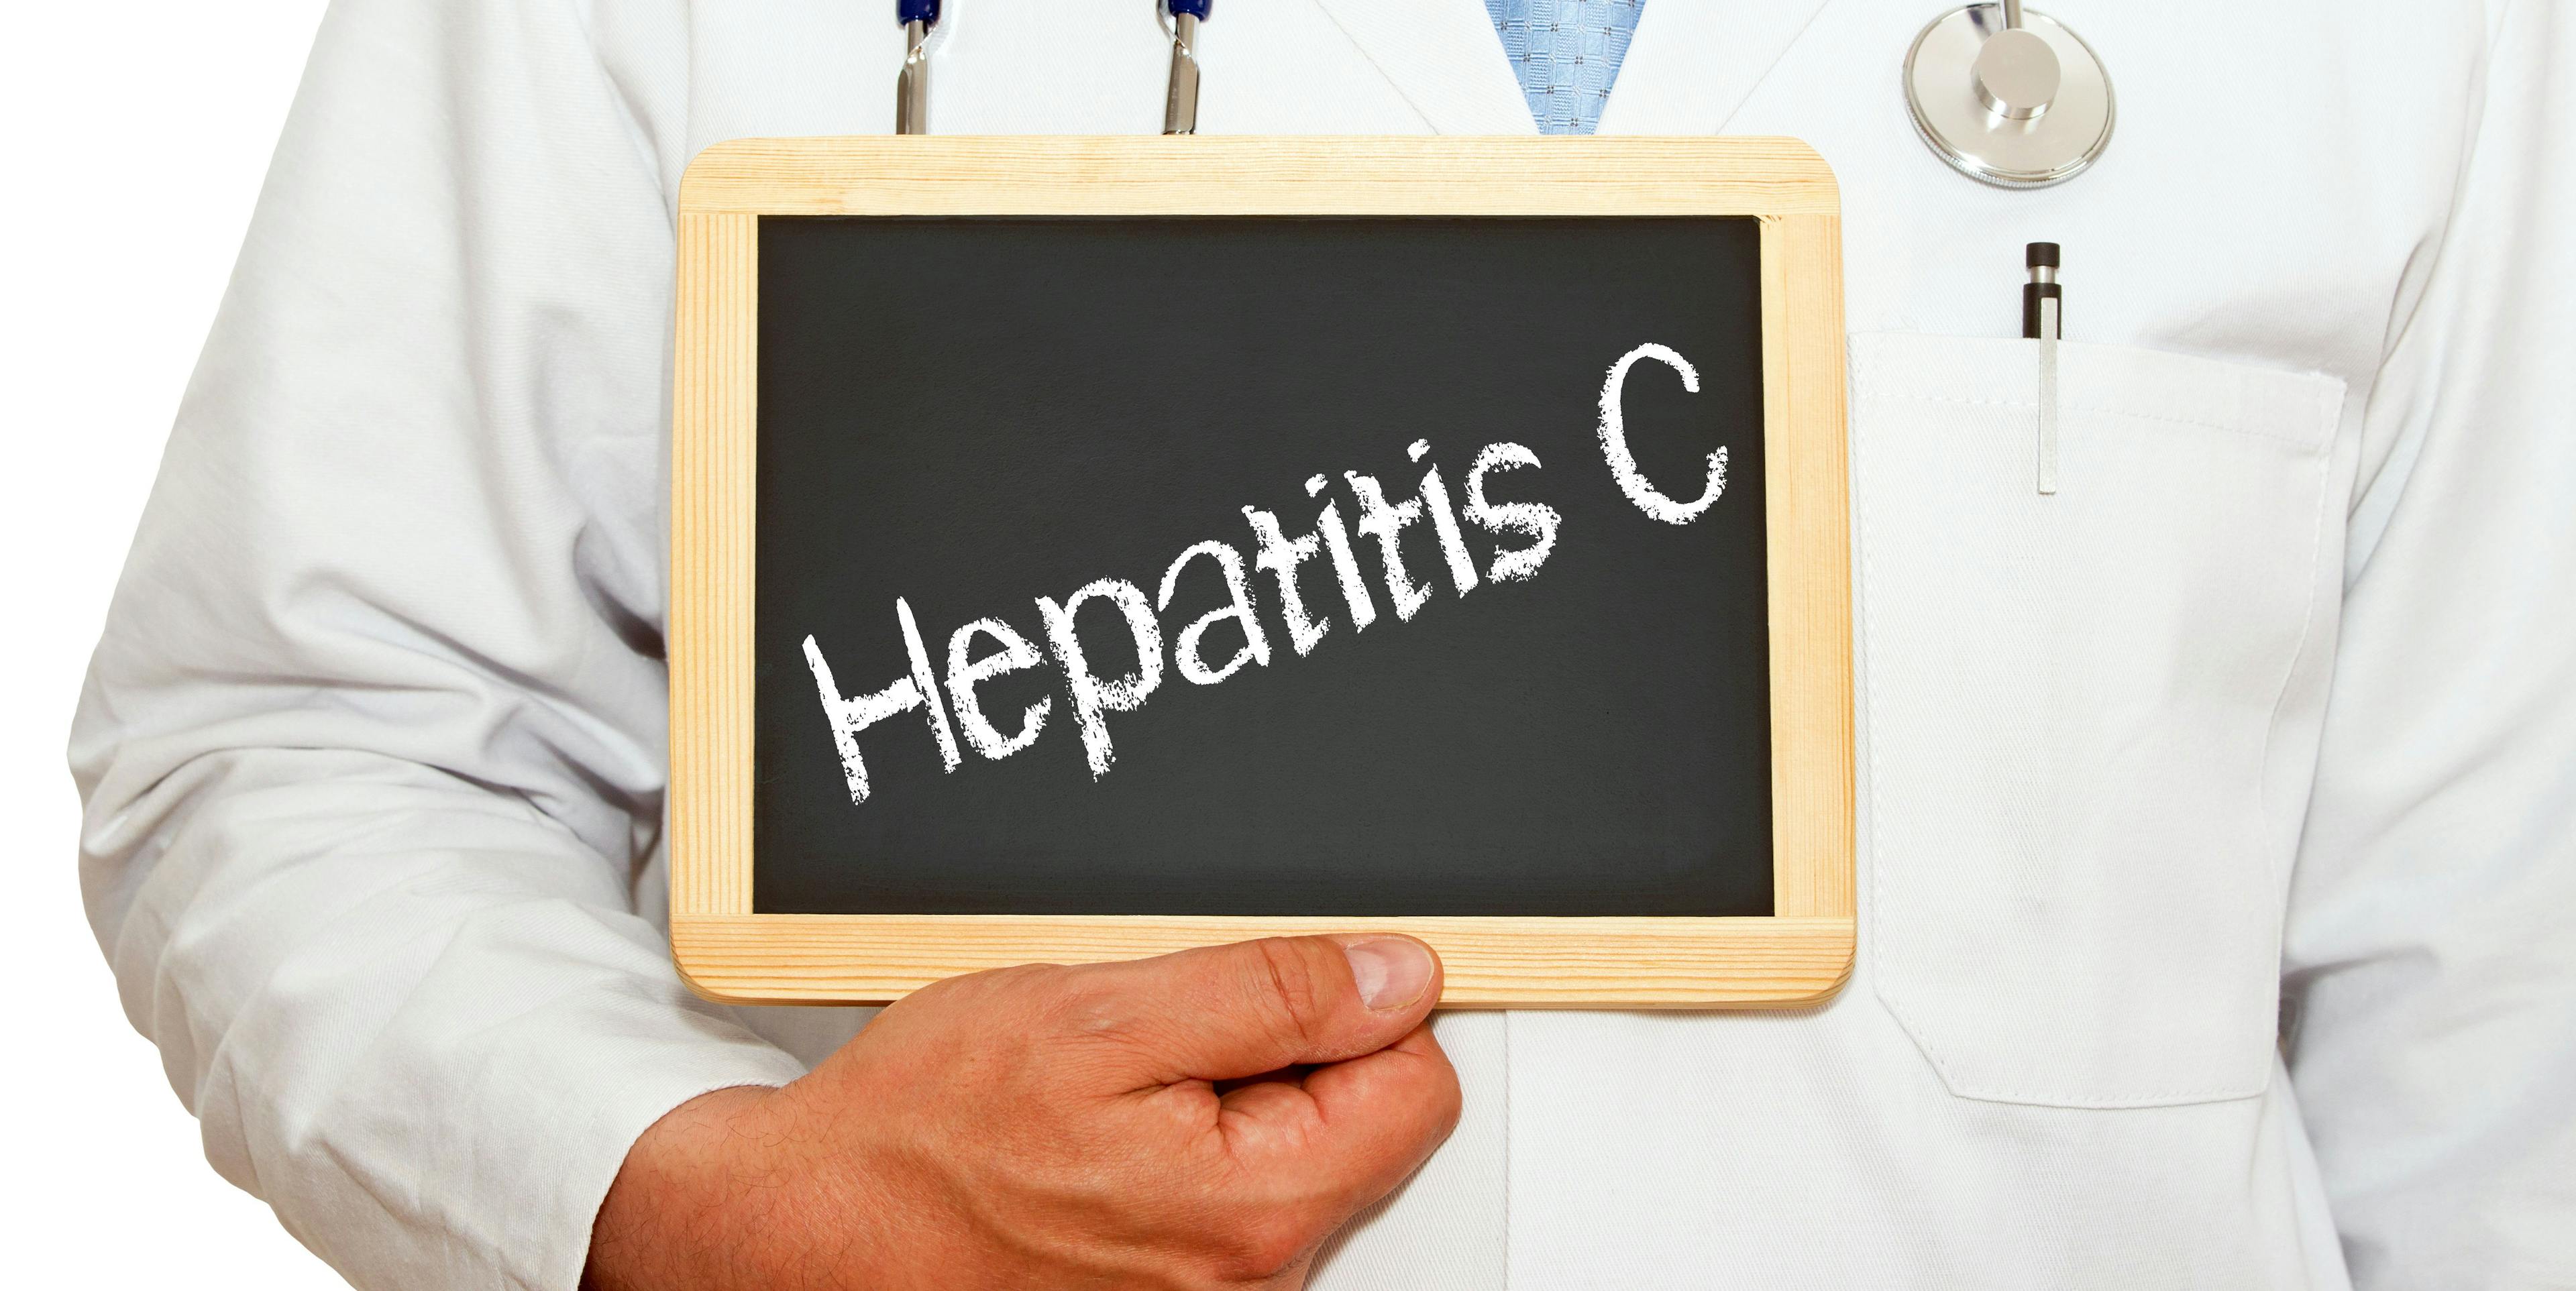 FDA Approves Viekira Pak for Treatment of Hepatitis C Virus